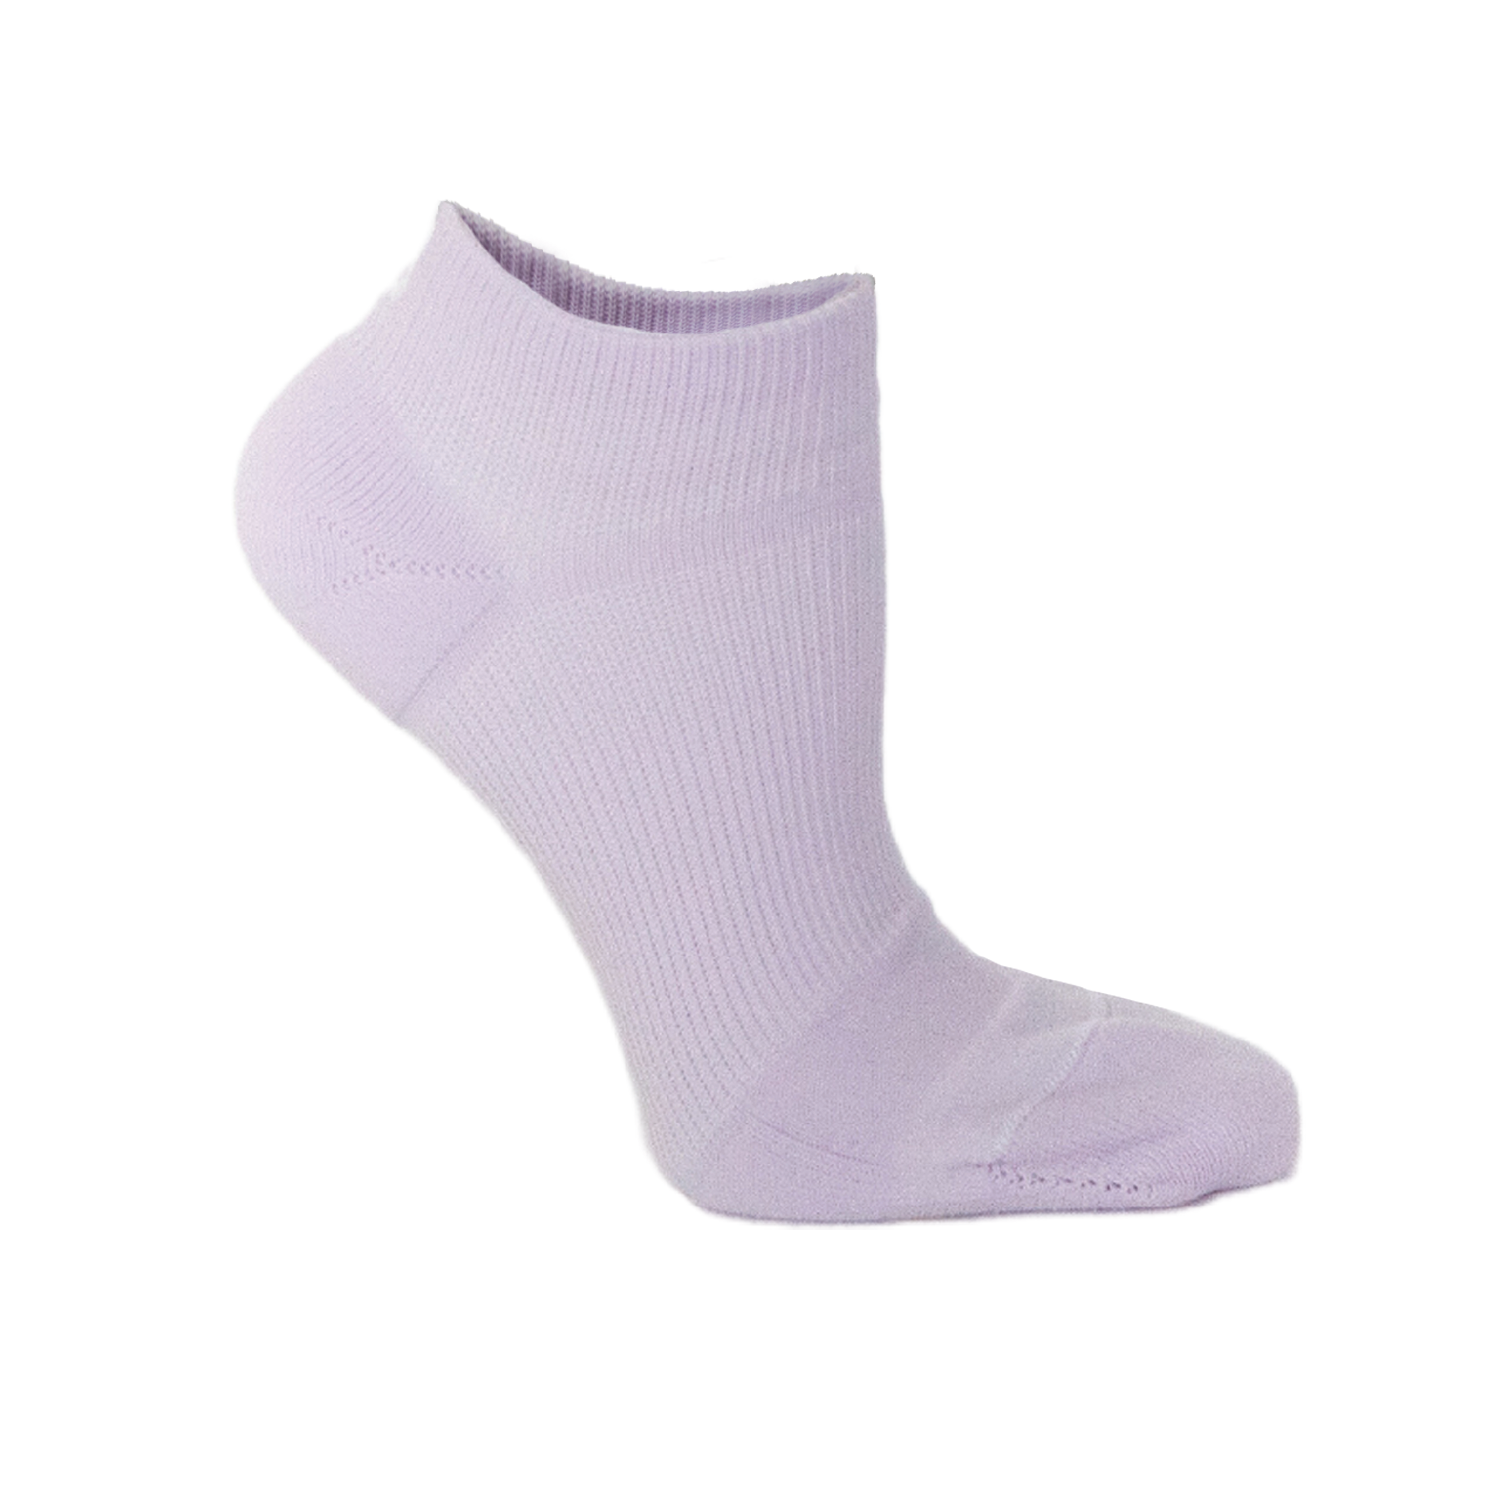 Body Glove Women's Aruba Hydro Shoes, Grey/Pink